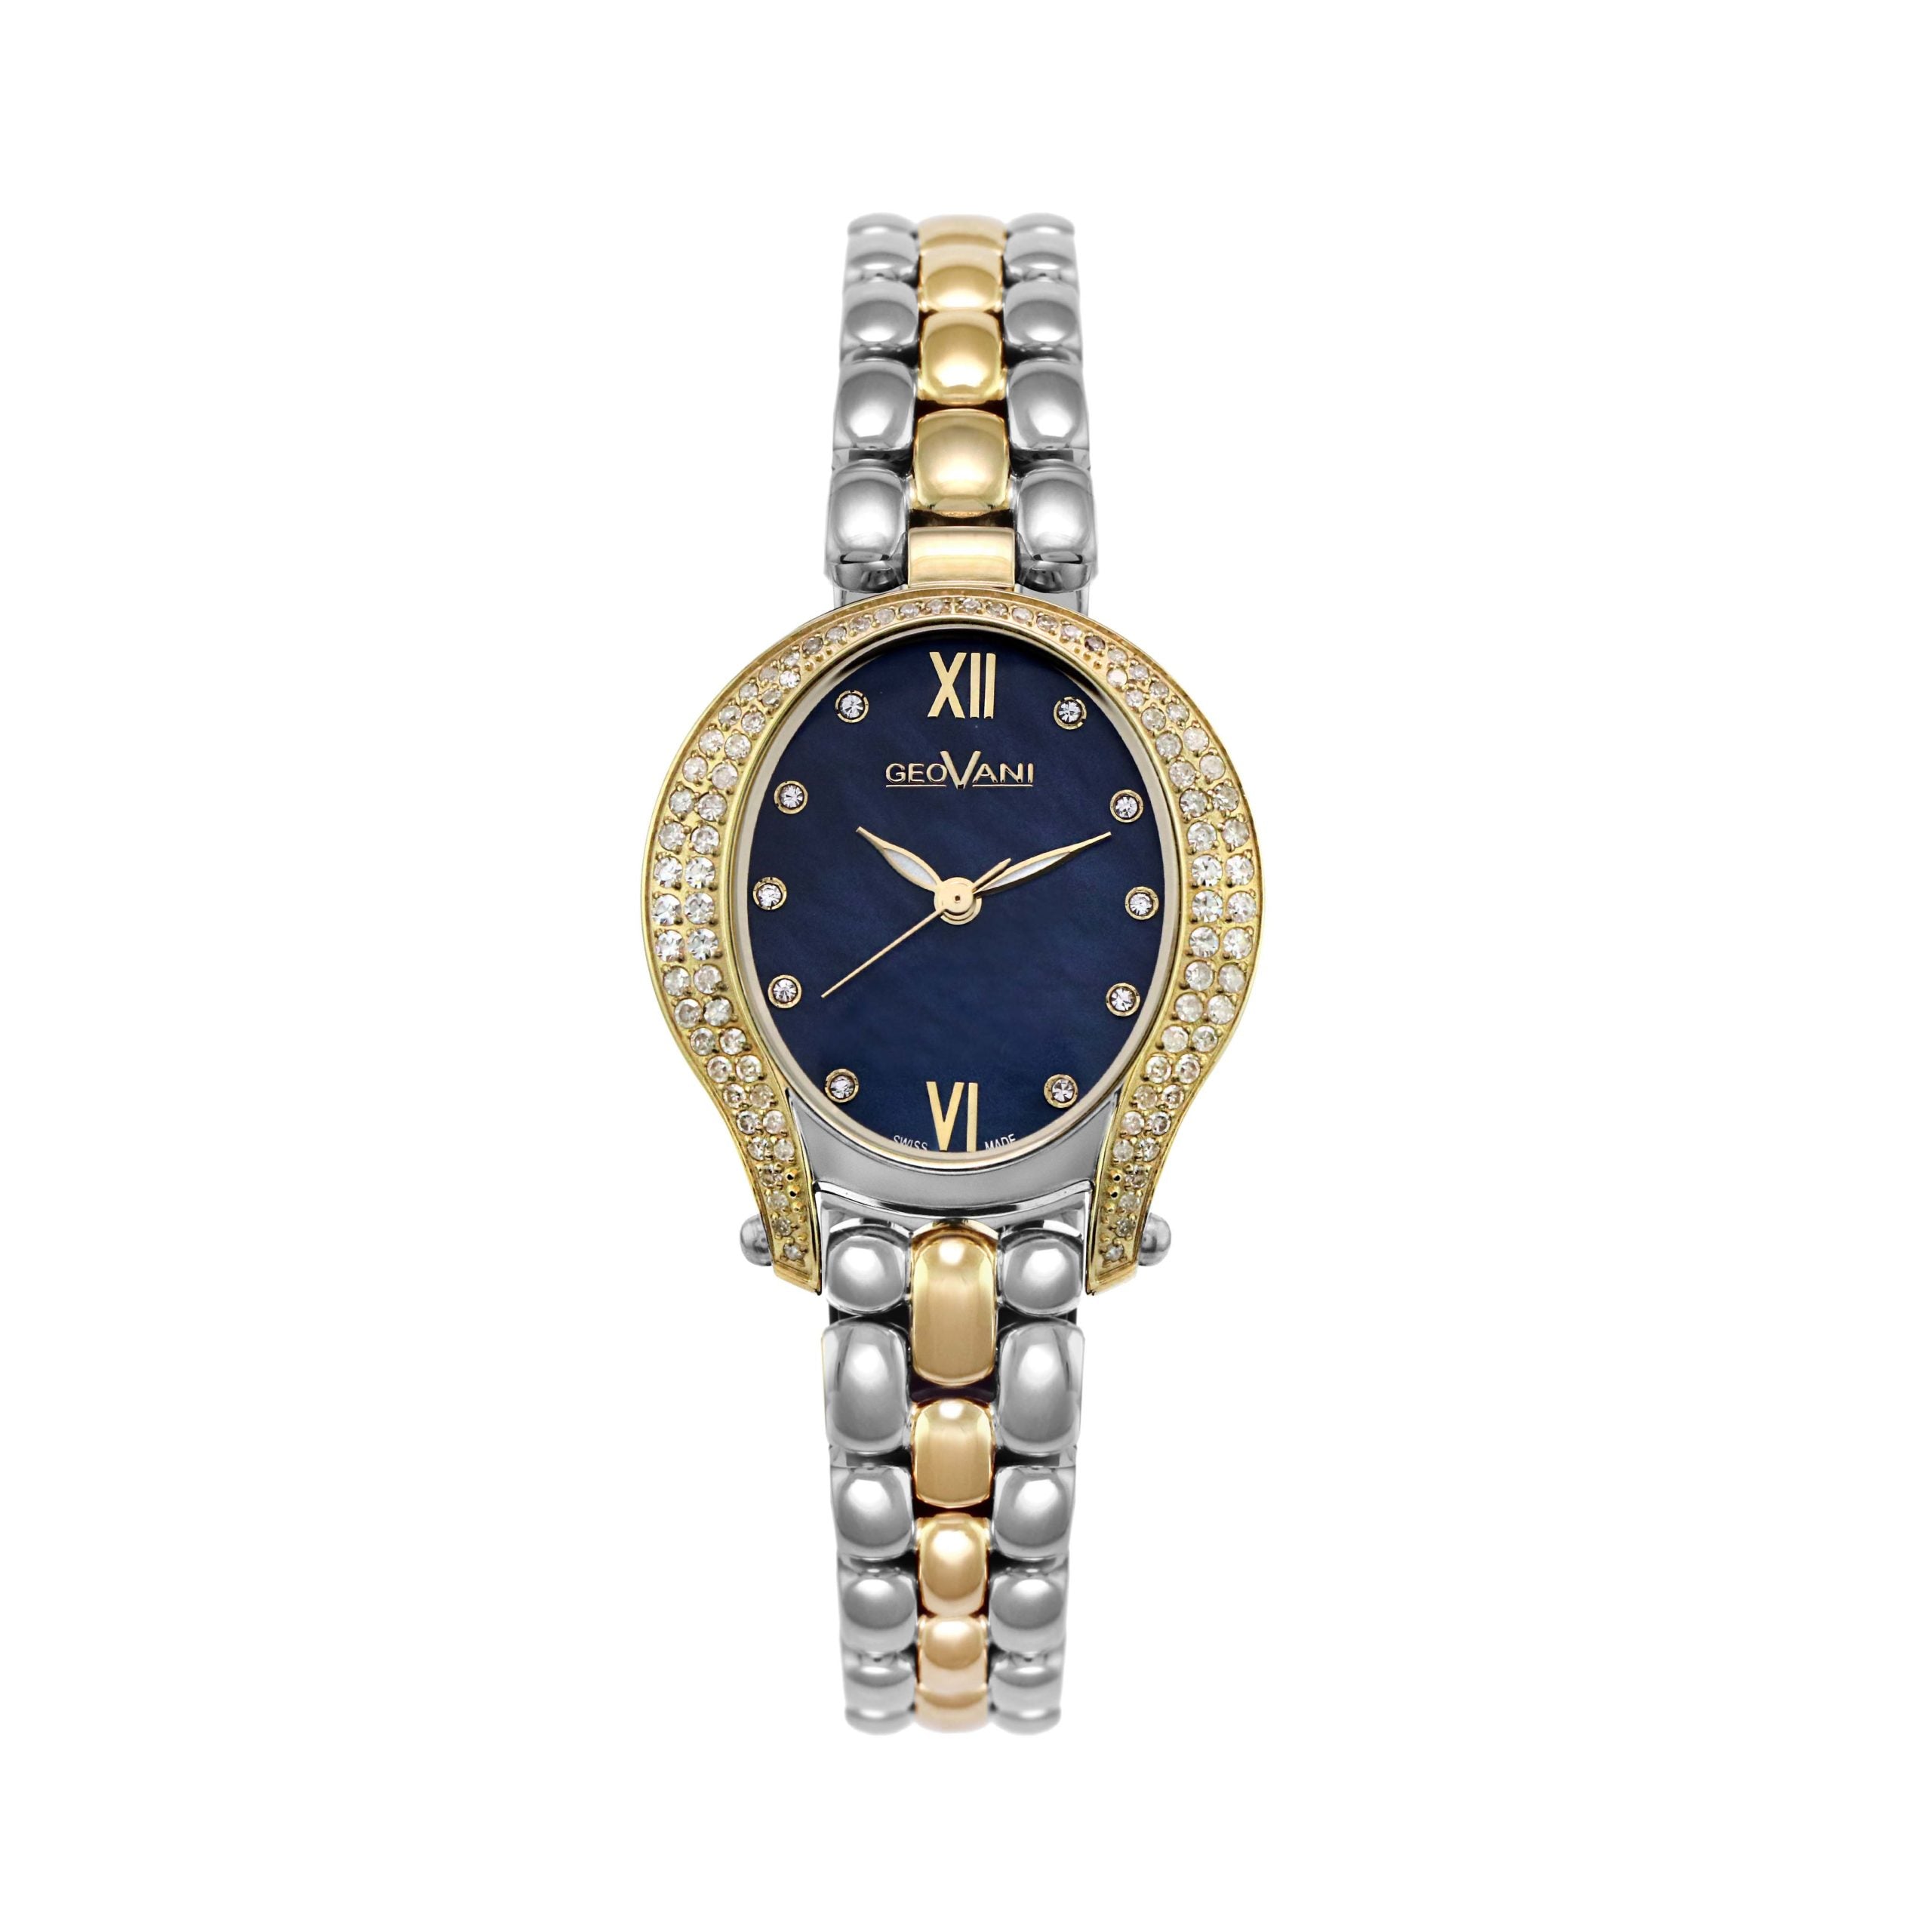 Giovanni Women's Swiss Quartz Watch with Blue Pearl Dial - GEO-0028